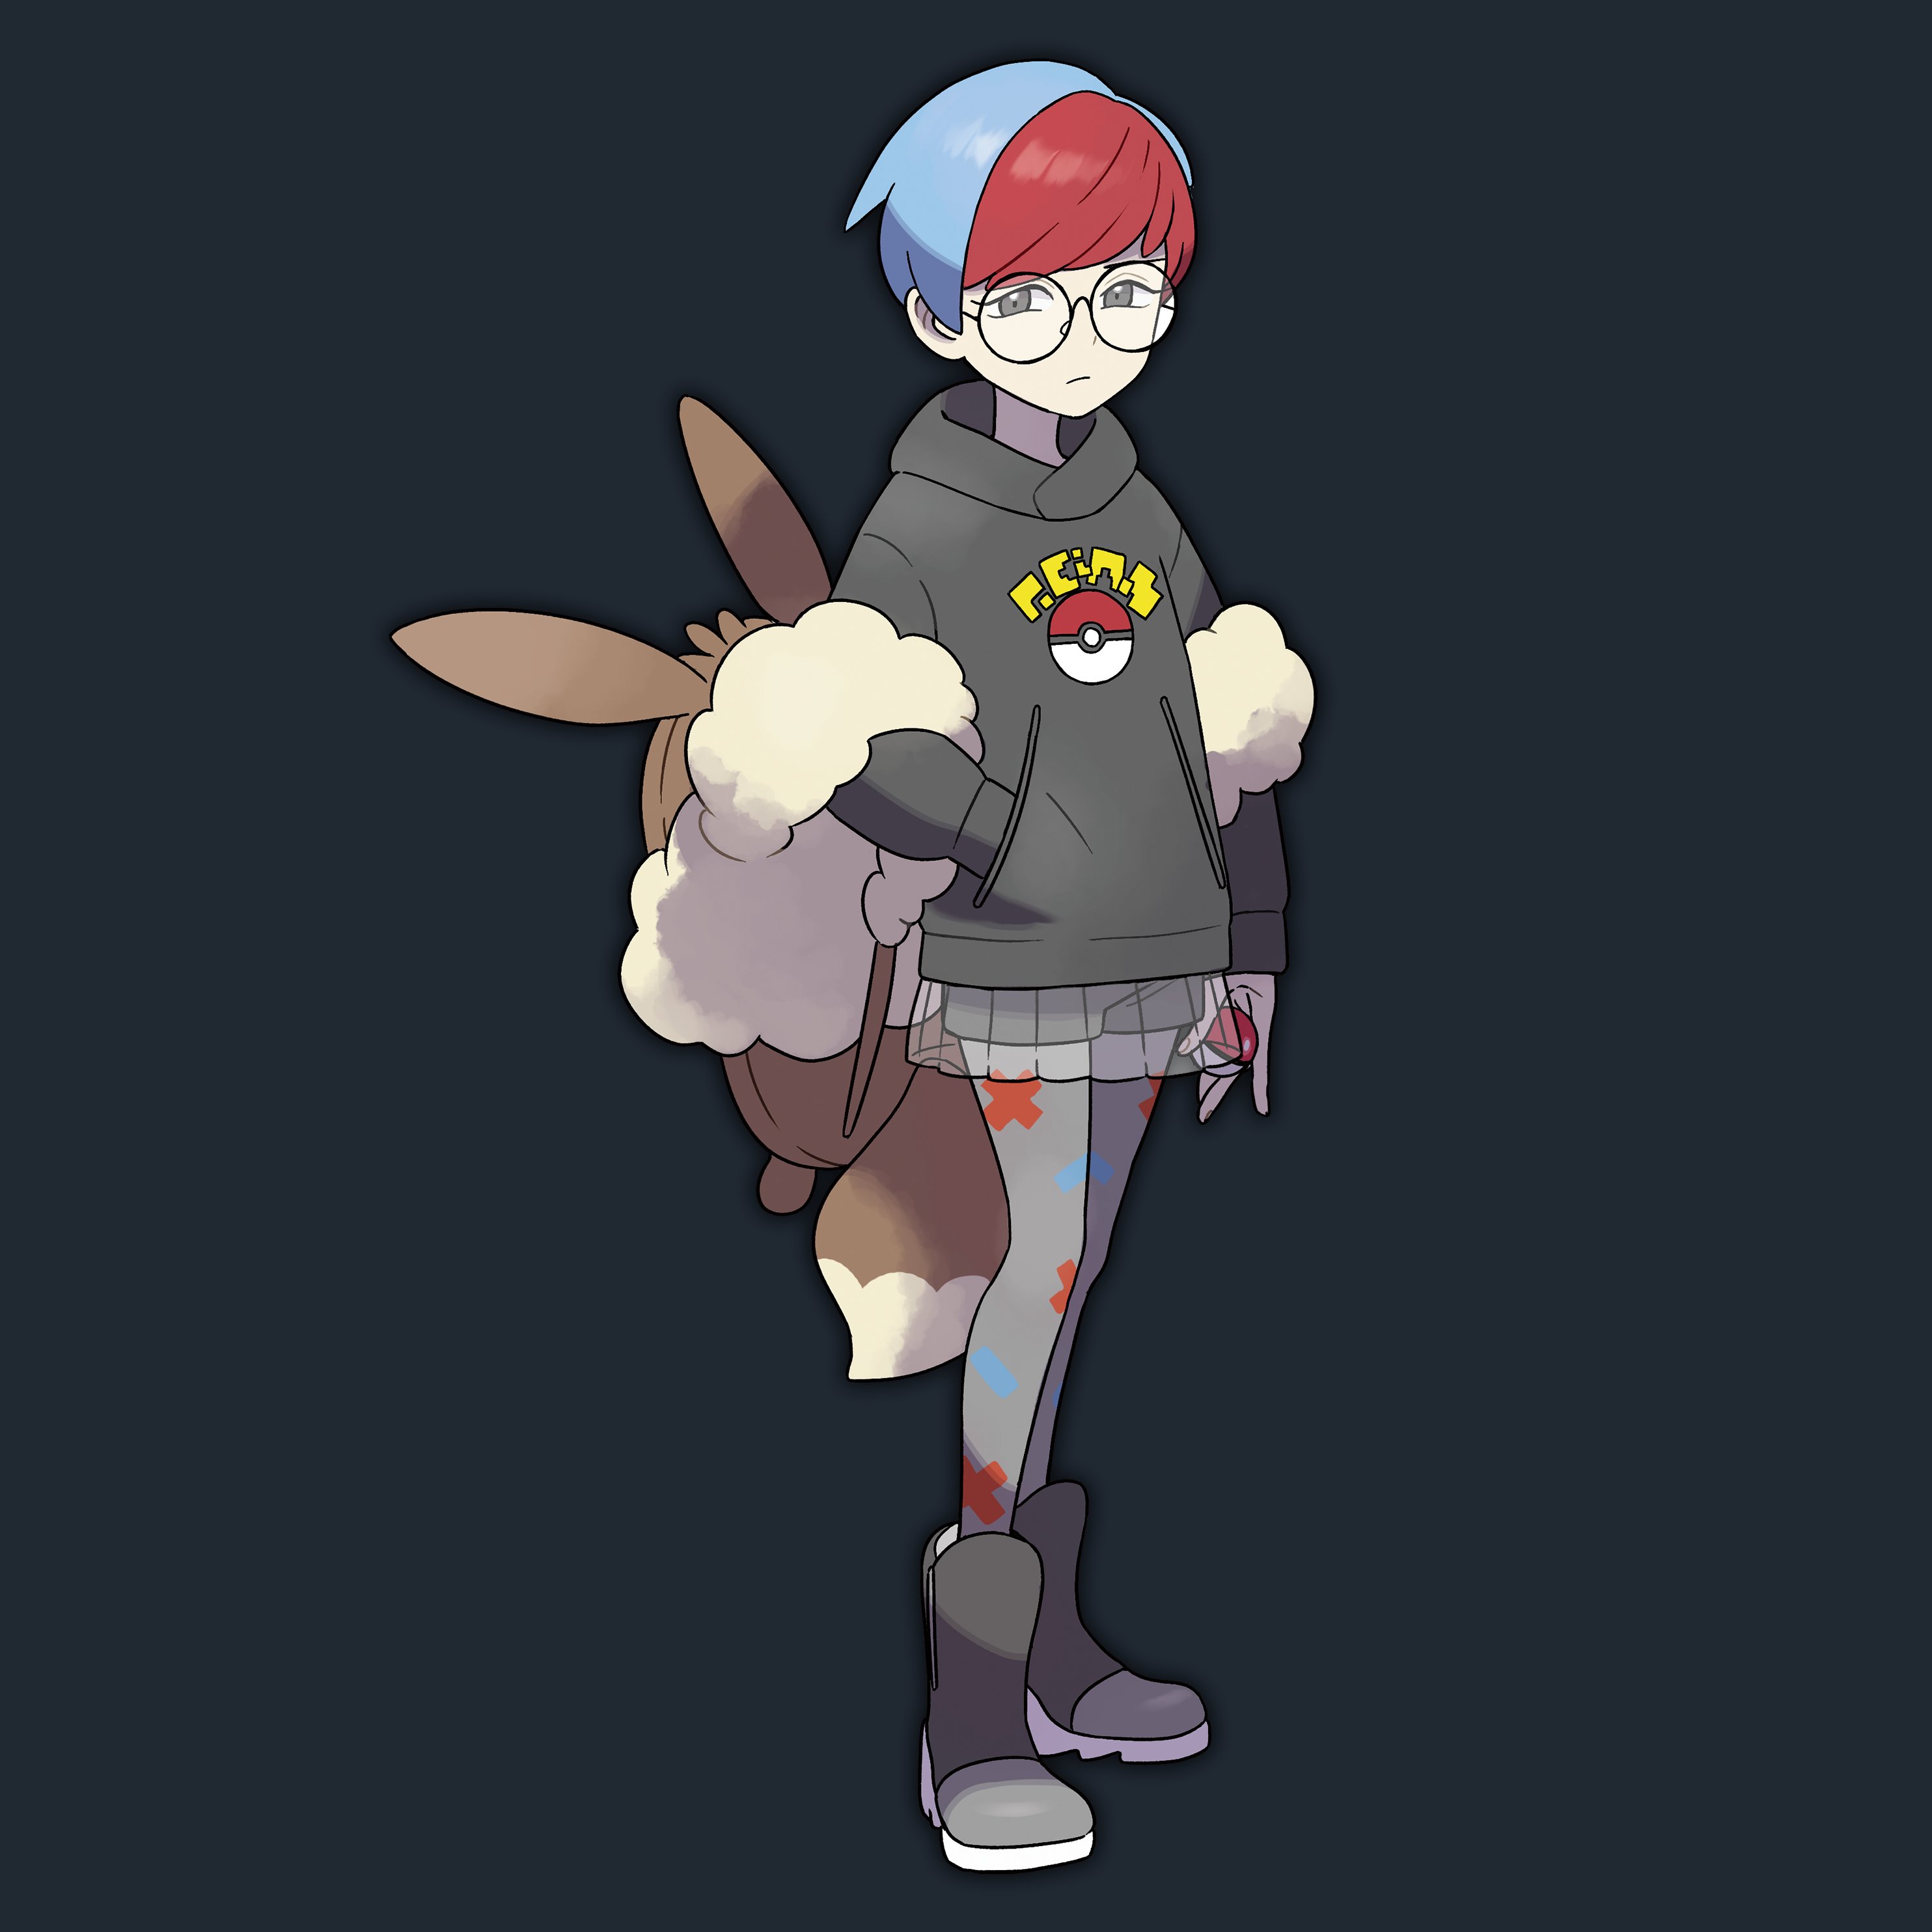 AMEü Art - New character design! Based off of the pokemon